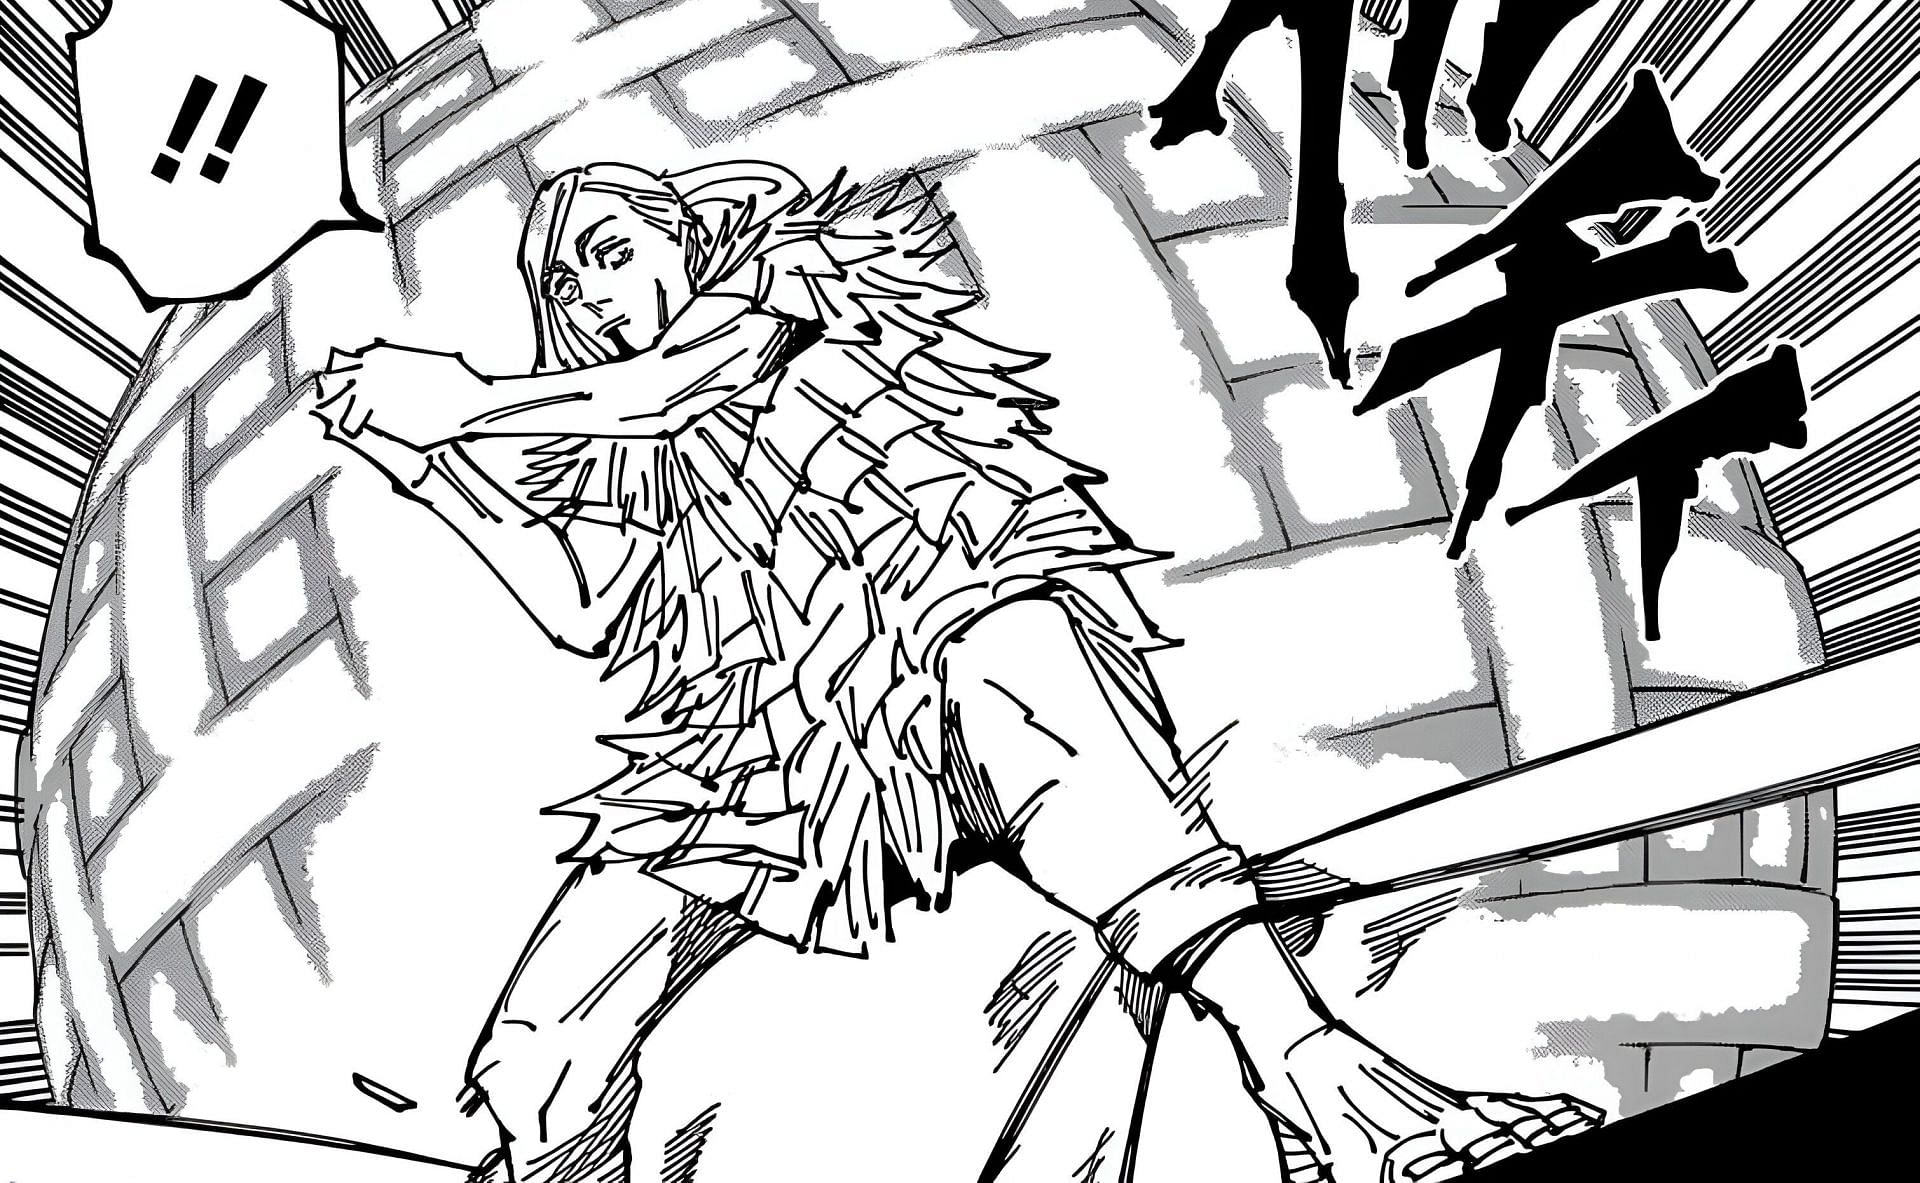 Reggie Star as seen in the Jujutsu Kaisen manga (Image via Shueisha)